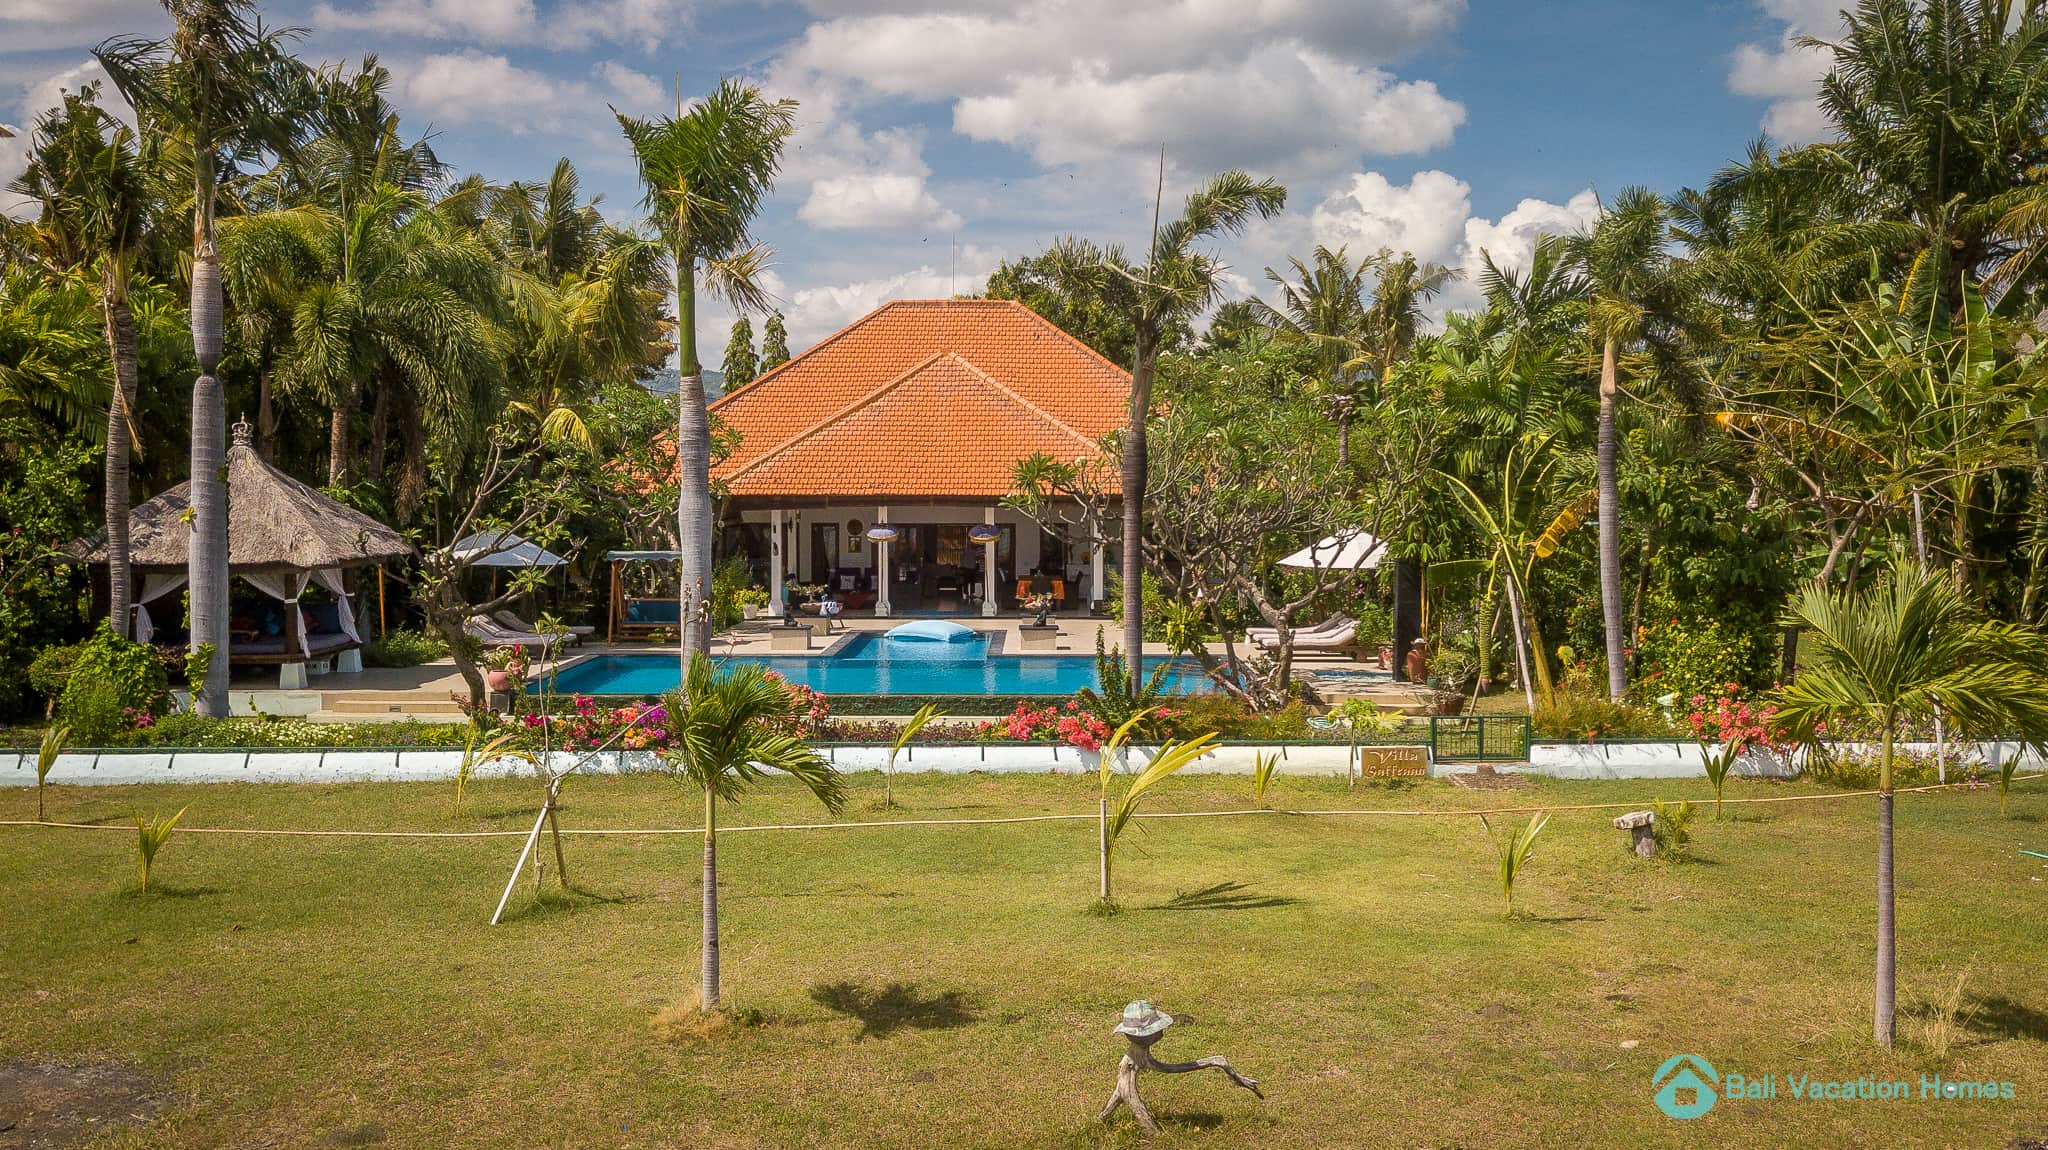 Villa-Saffraan-Bali-Vacation-Homes1